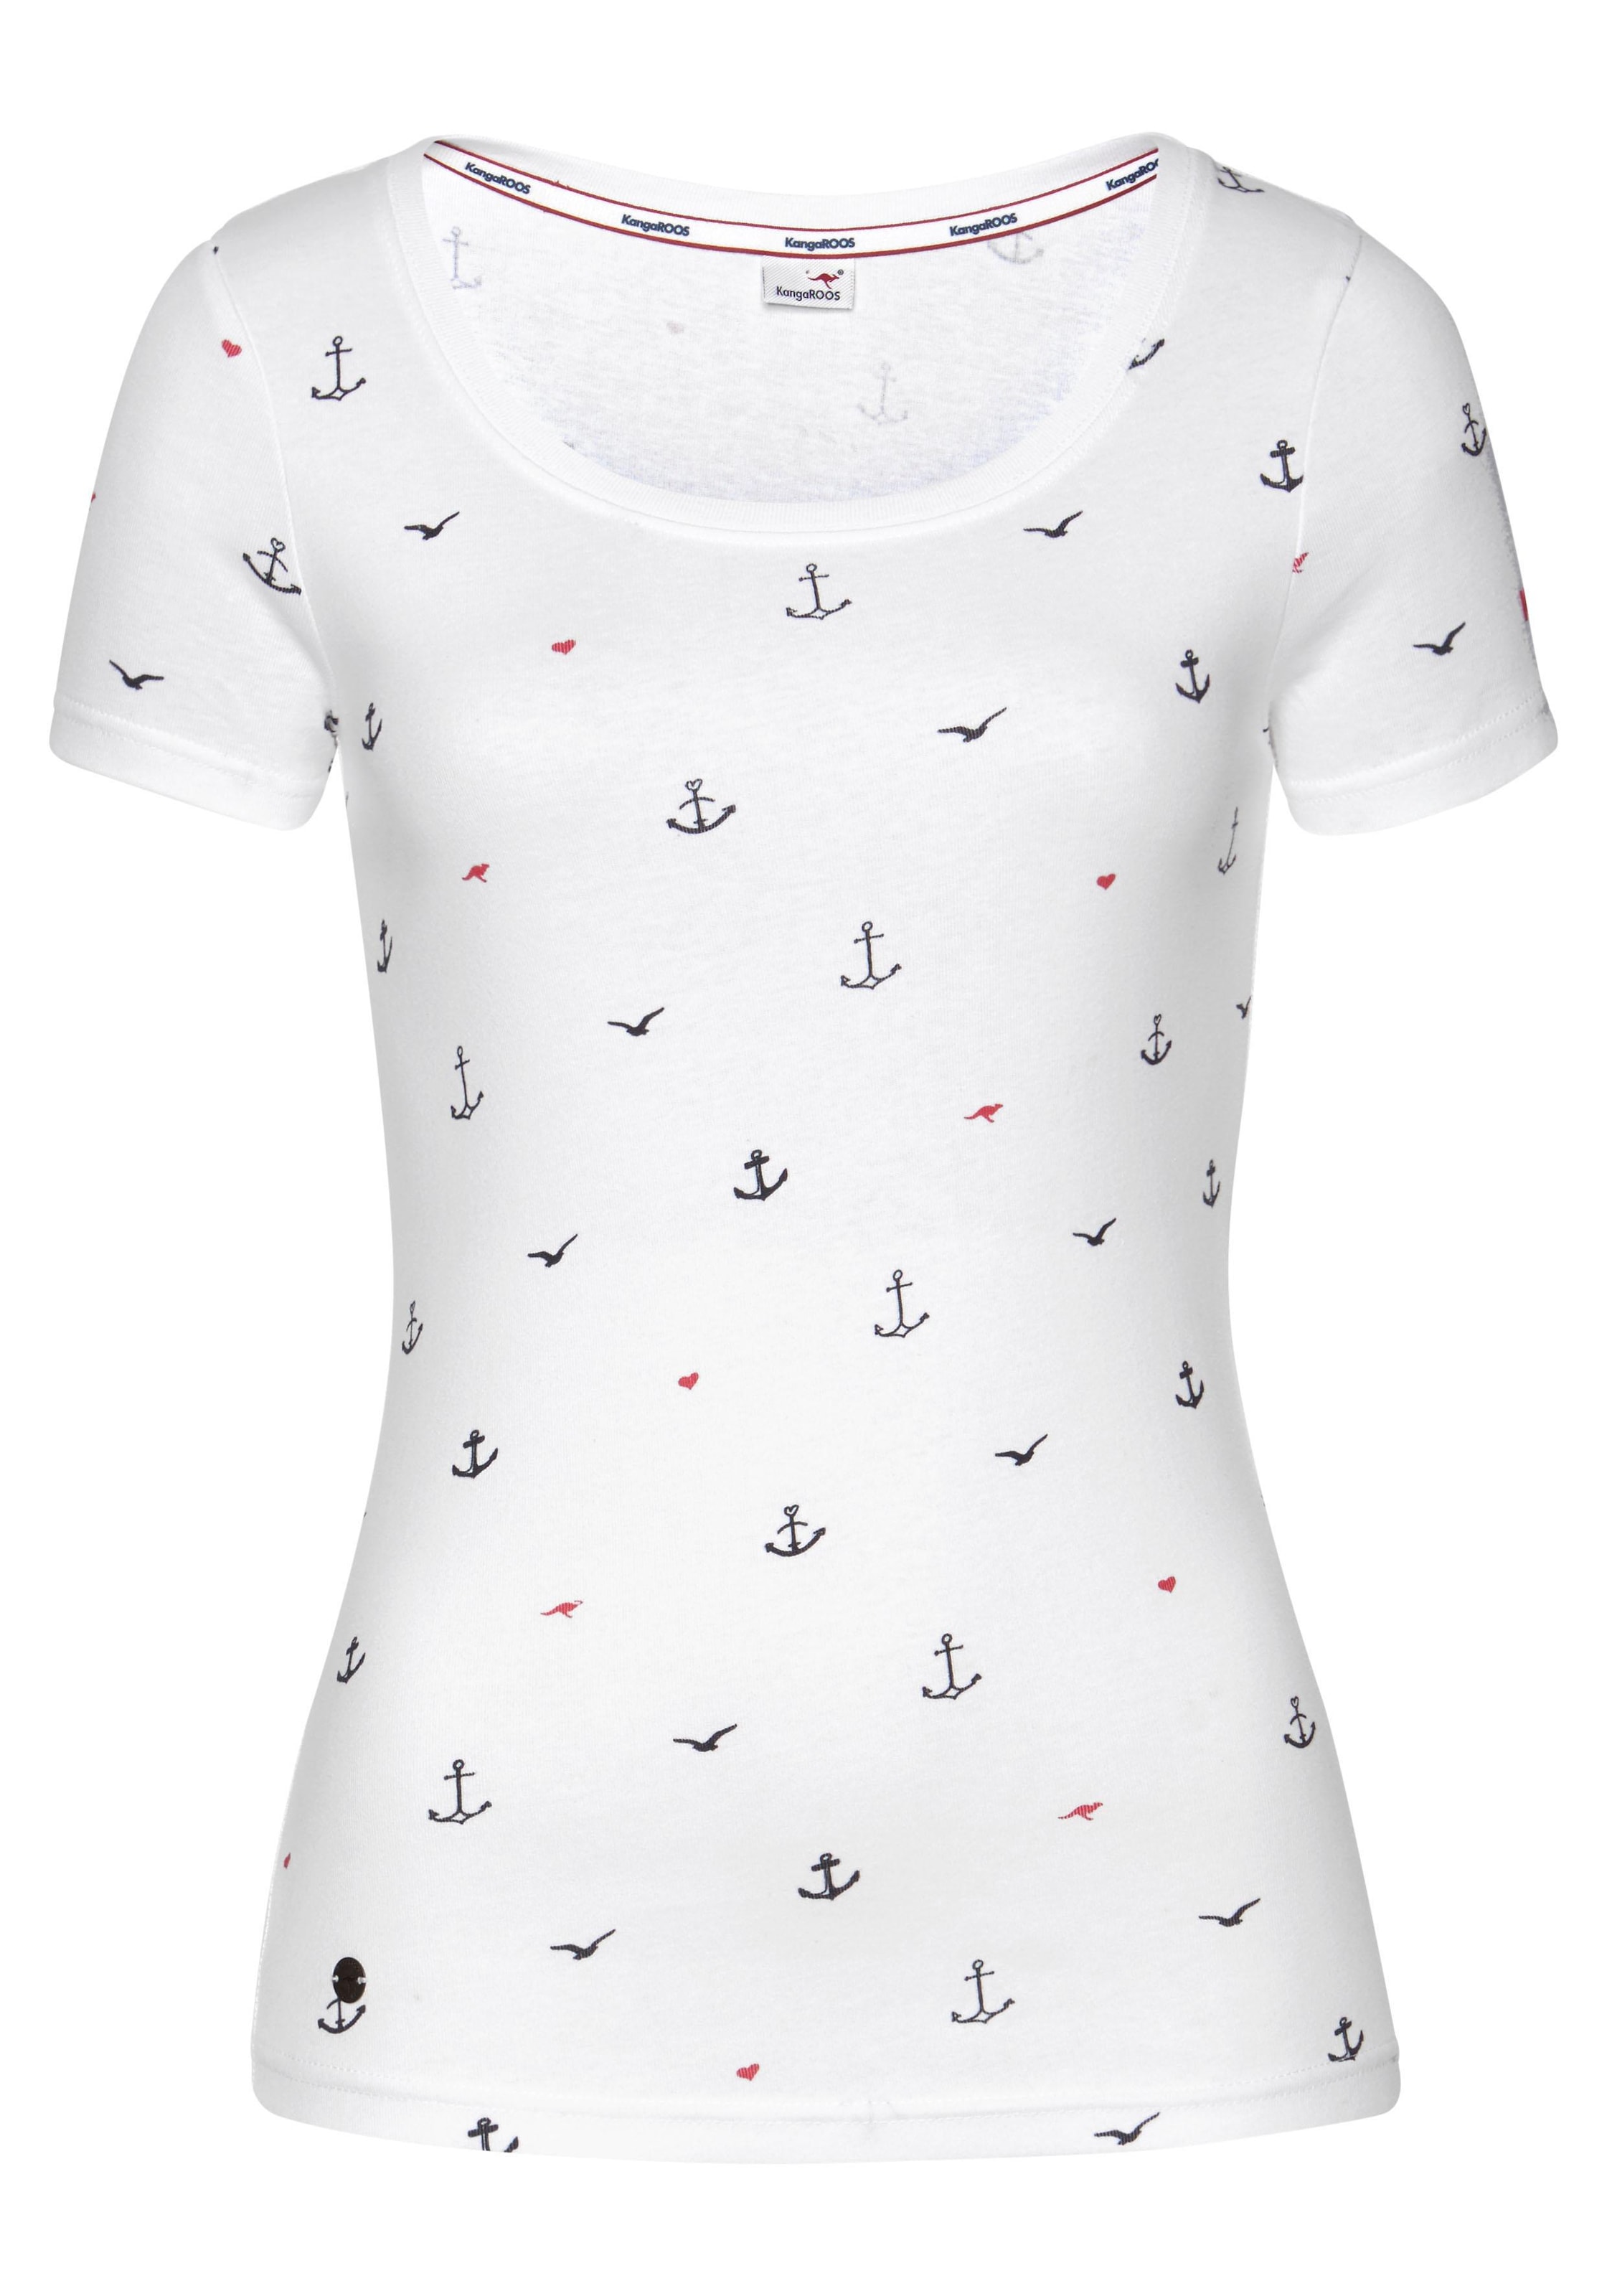 KangaROOS T-Shirt, Reh-Print mit oder shoppen Anker, Schiffchen